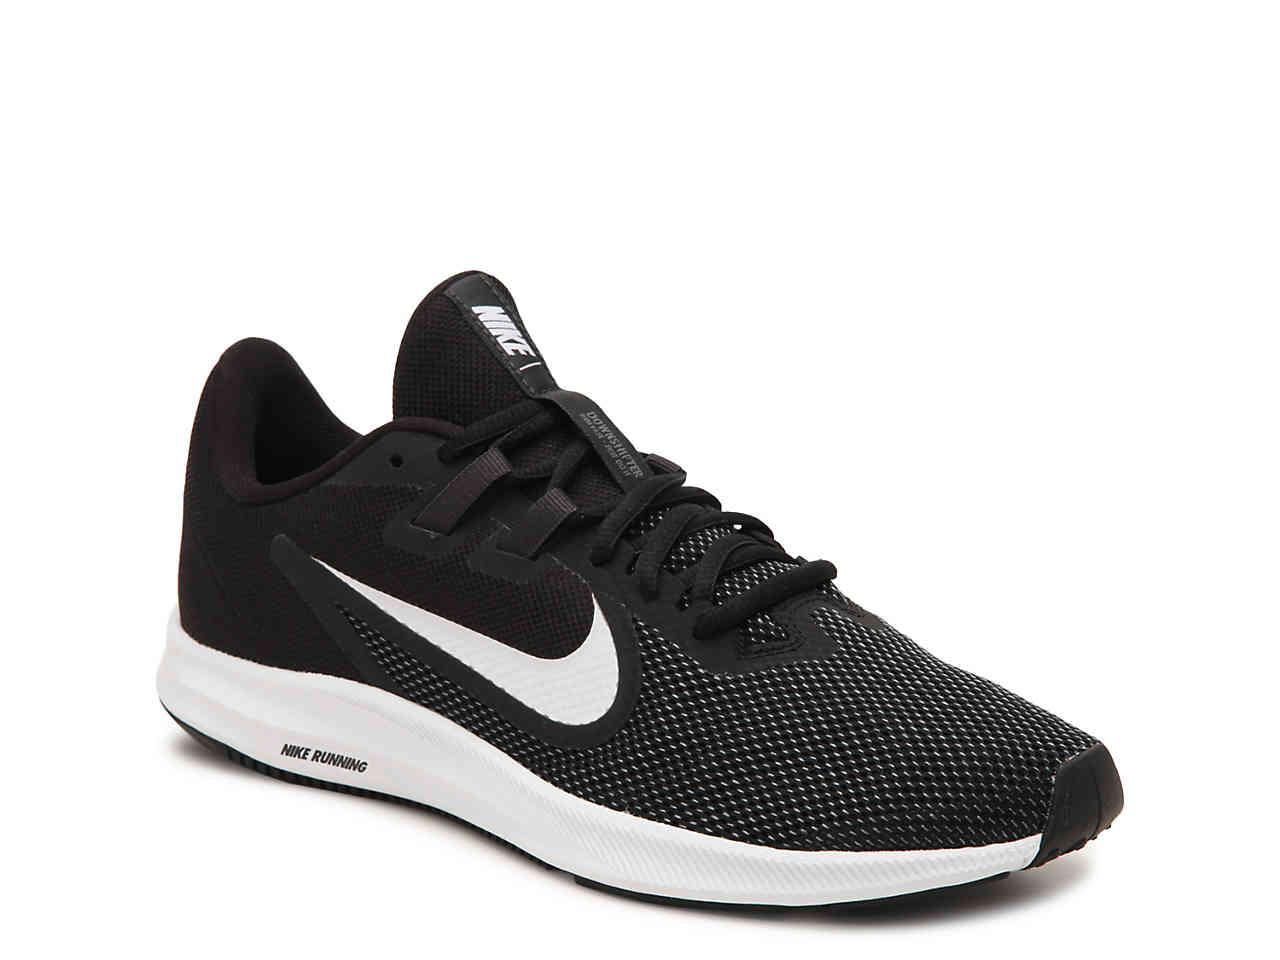 Nike Downshifter 9 Lightweight Running Shoe in Black - Lyst